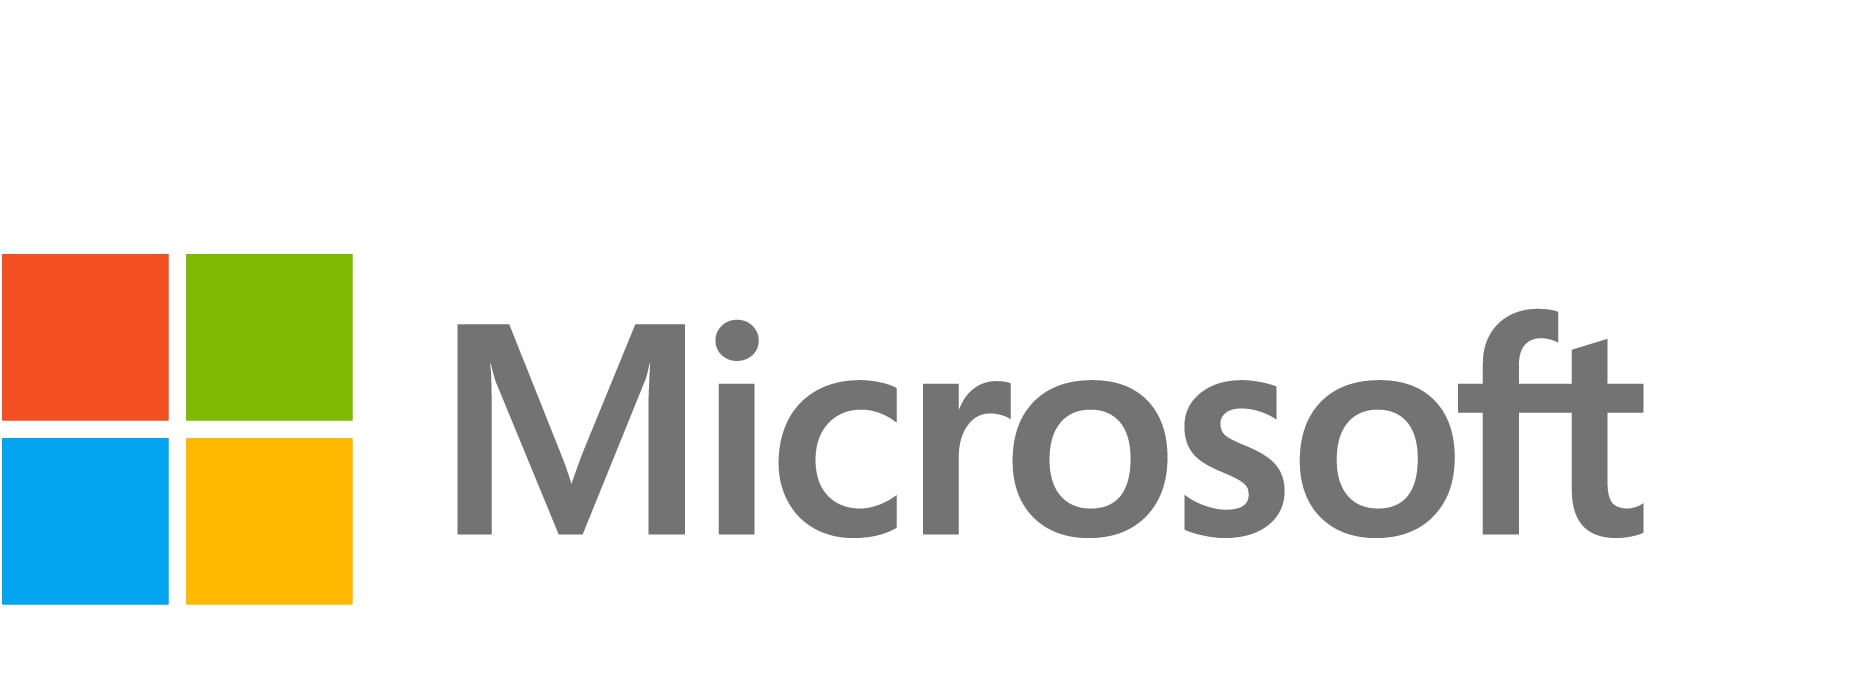 Microsoft Windows Remote Desktop Services - External Connector License - 1 server